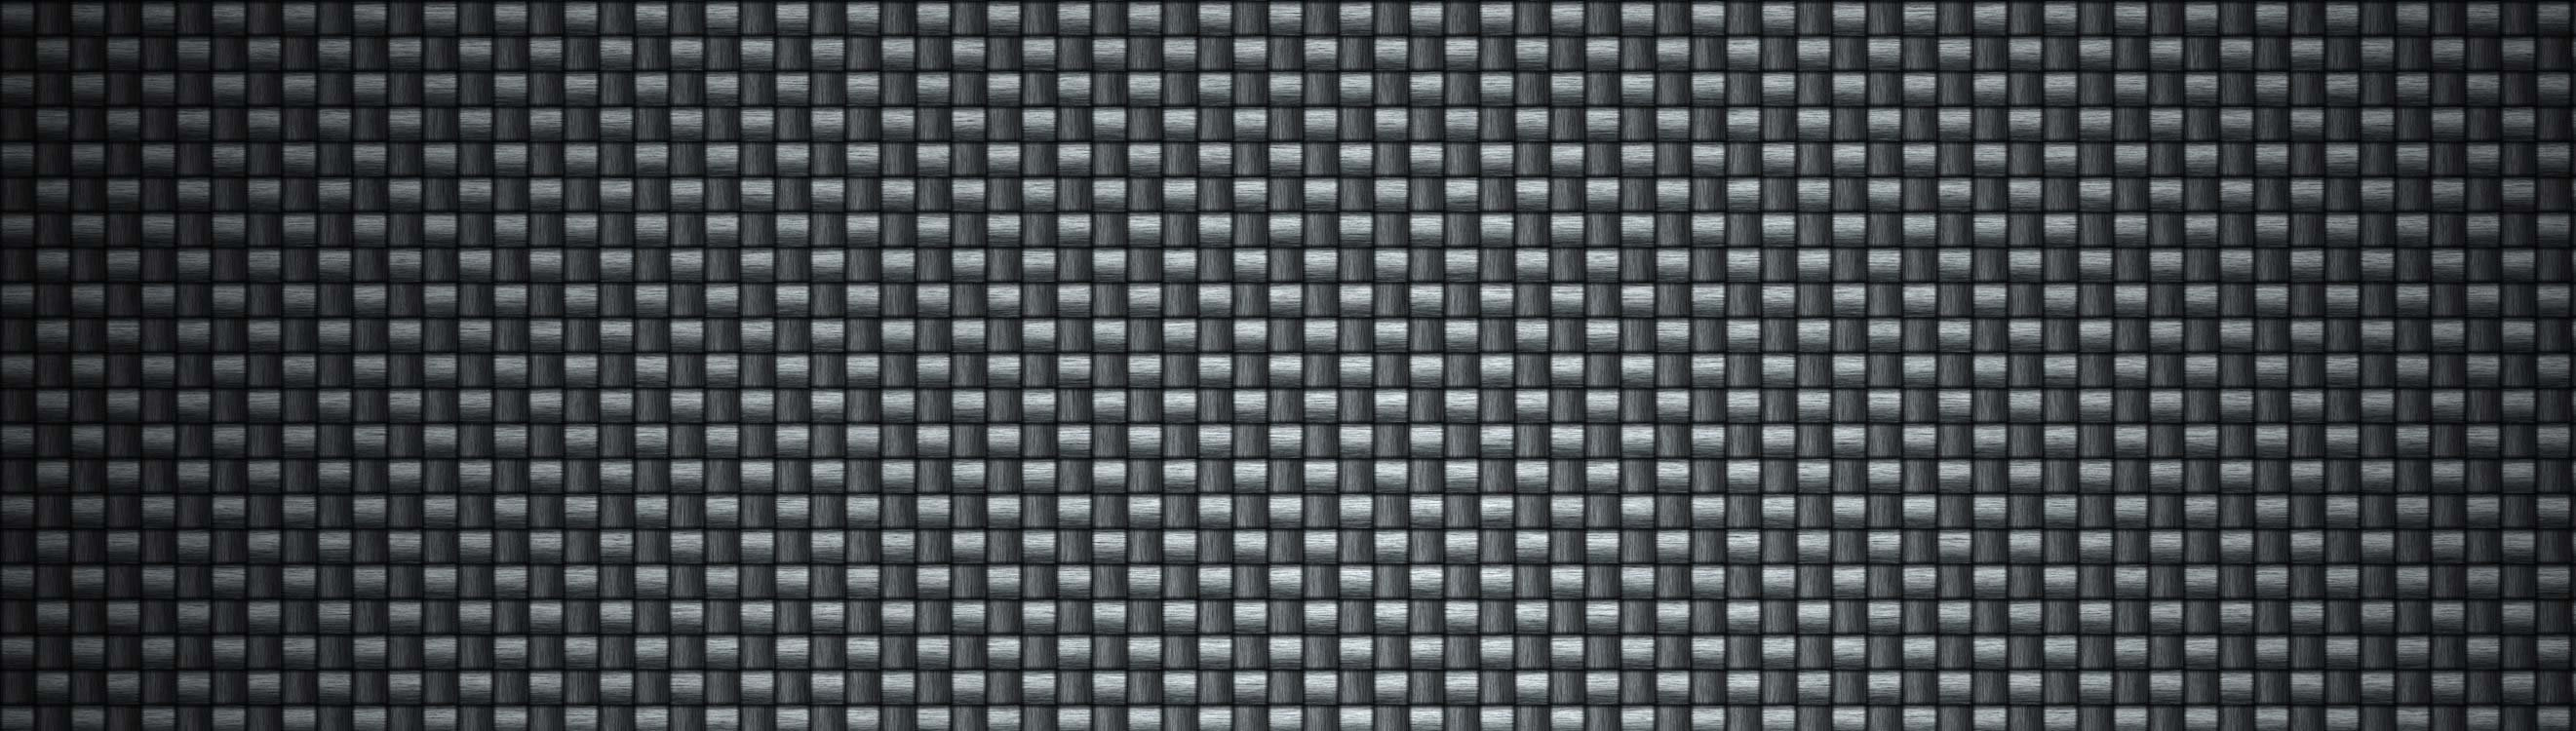 carbon fiber background texture, скачать фон, текстура, карбон, карбоновое волокно, фото